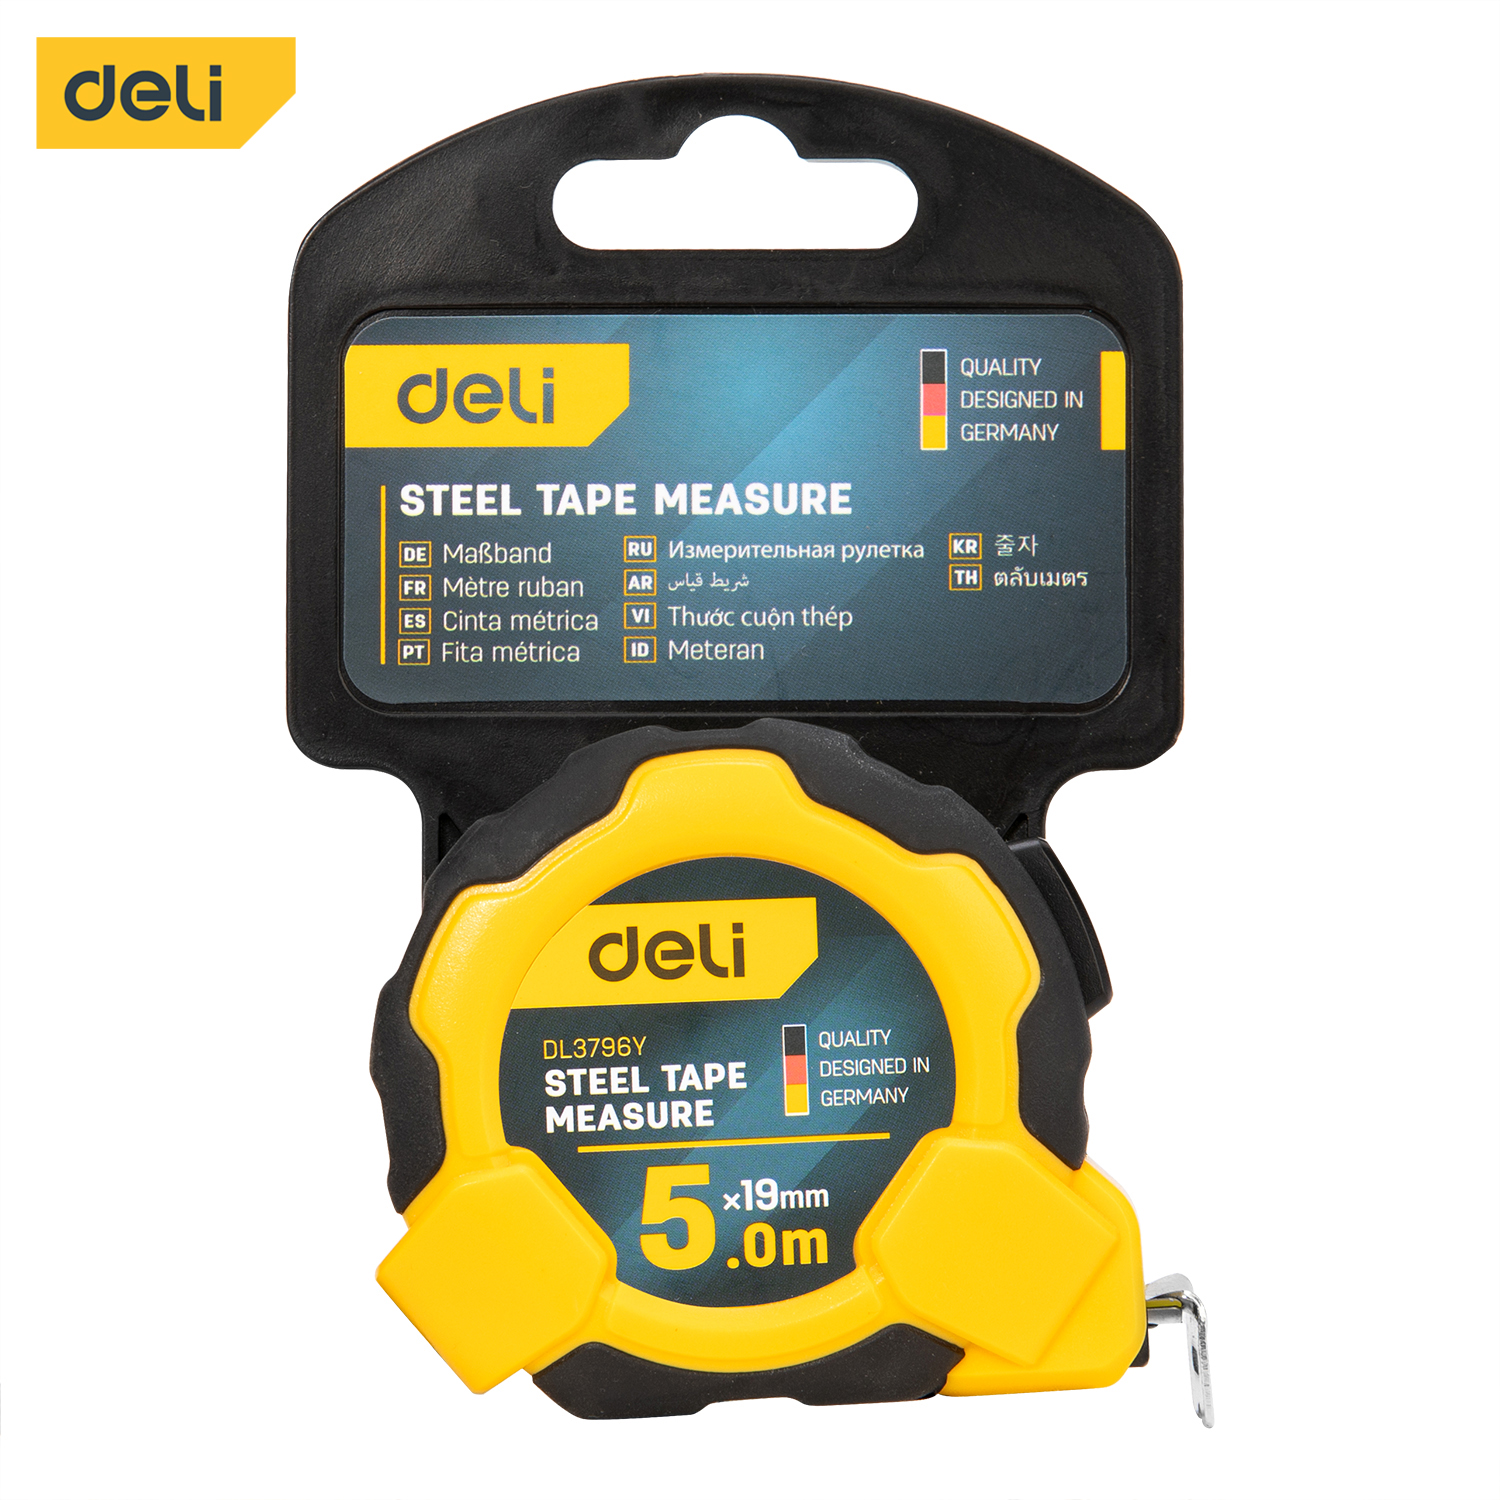 Deli-EDL3796Y Steel Measuring Tape